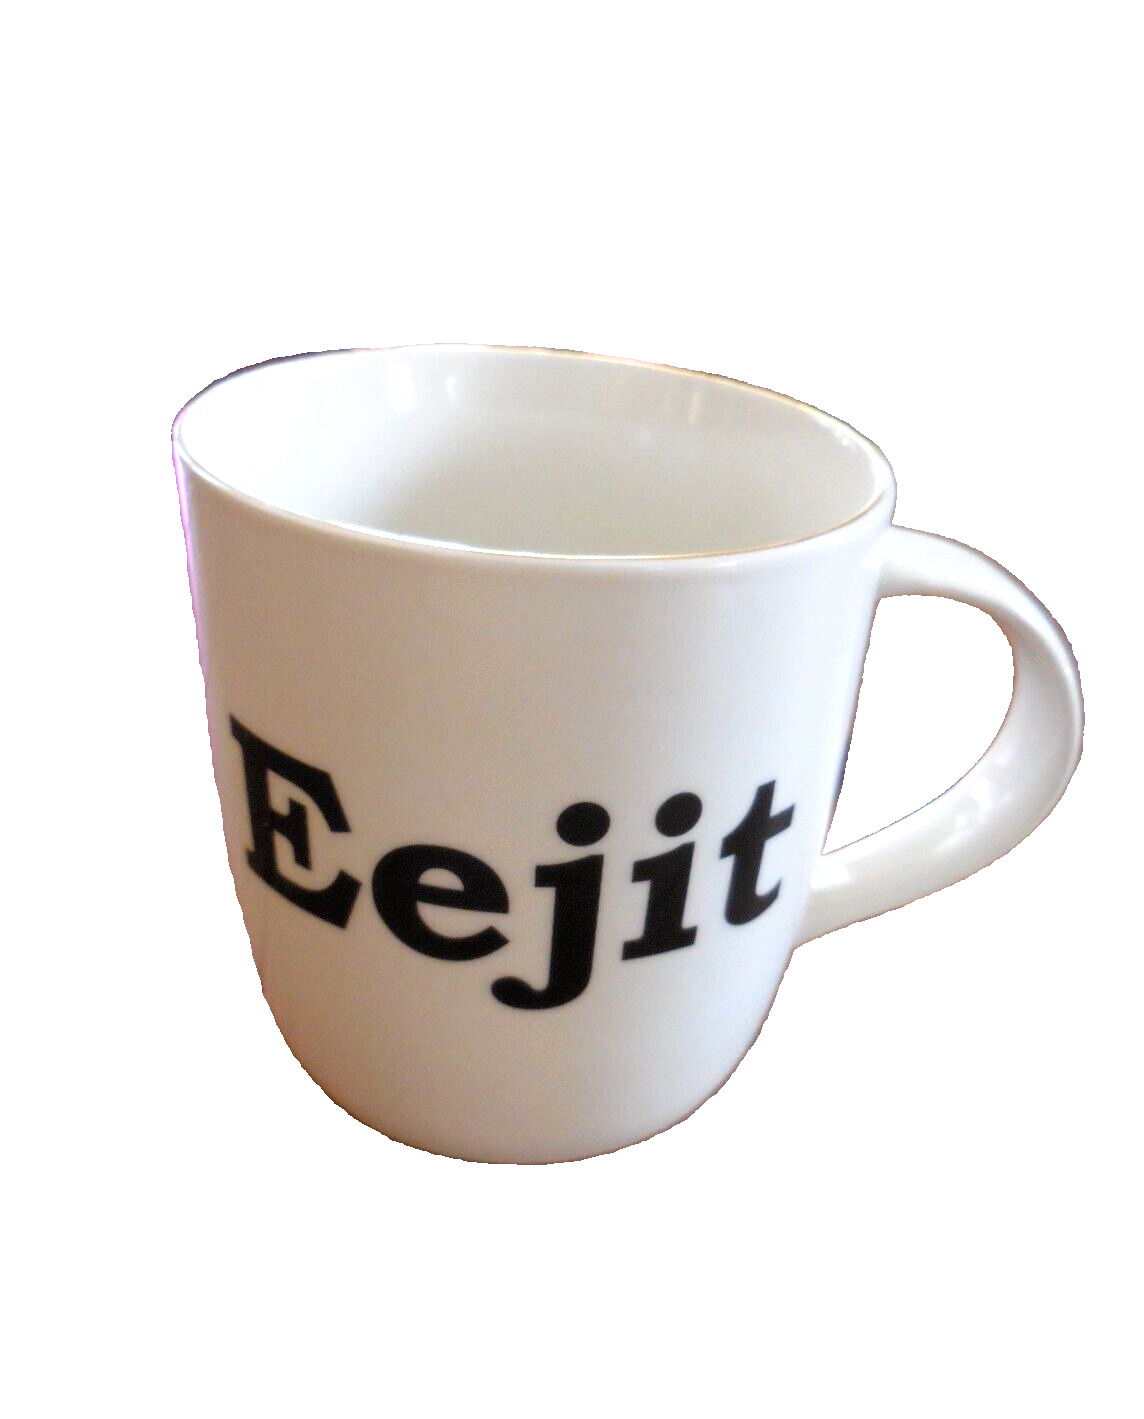 Shannonbridge Irish Sayings Coffee Mug, Eegit, made in Ireland